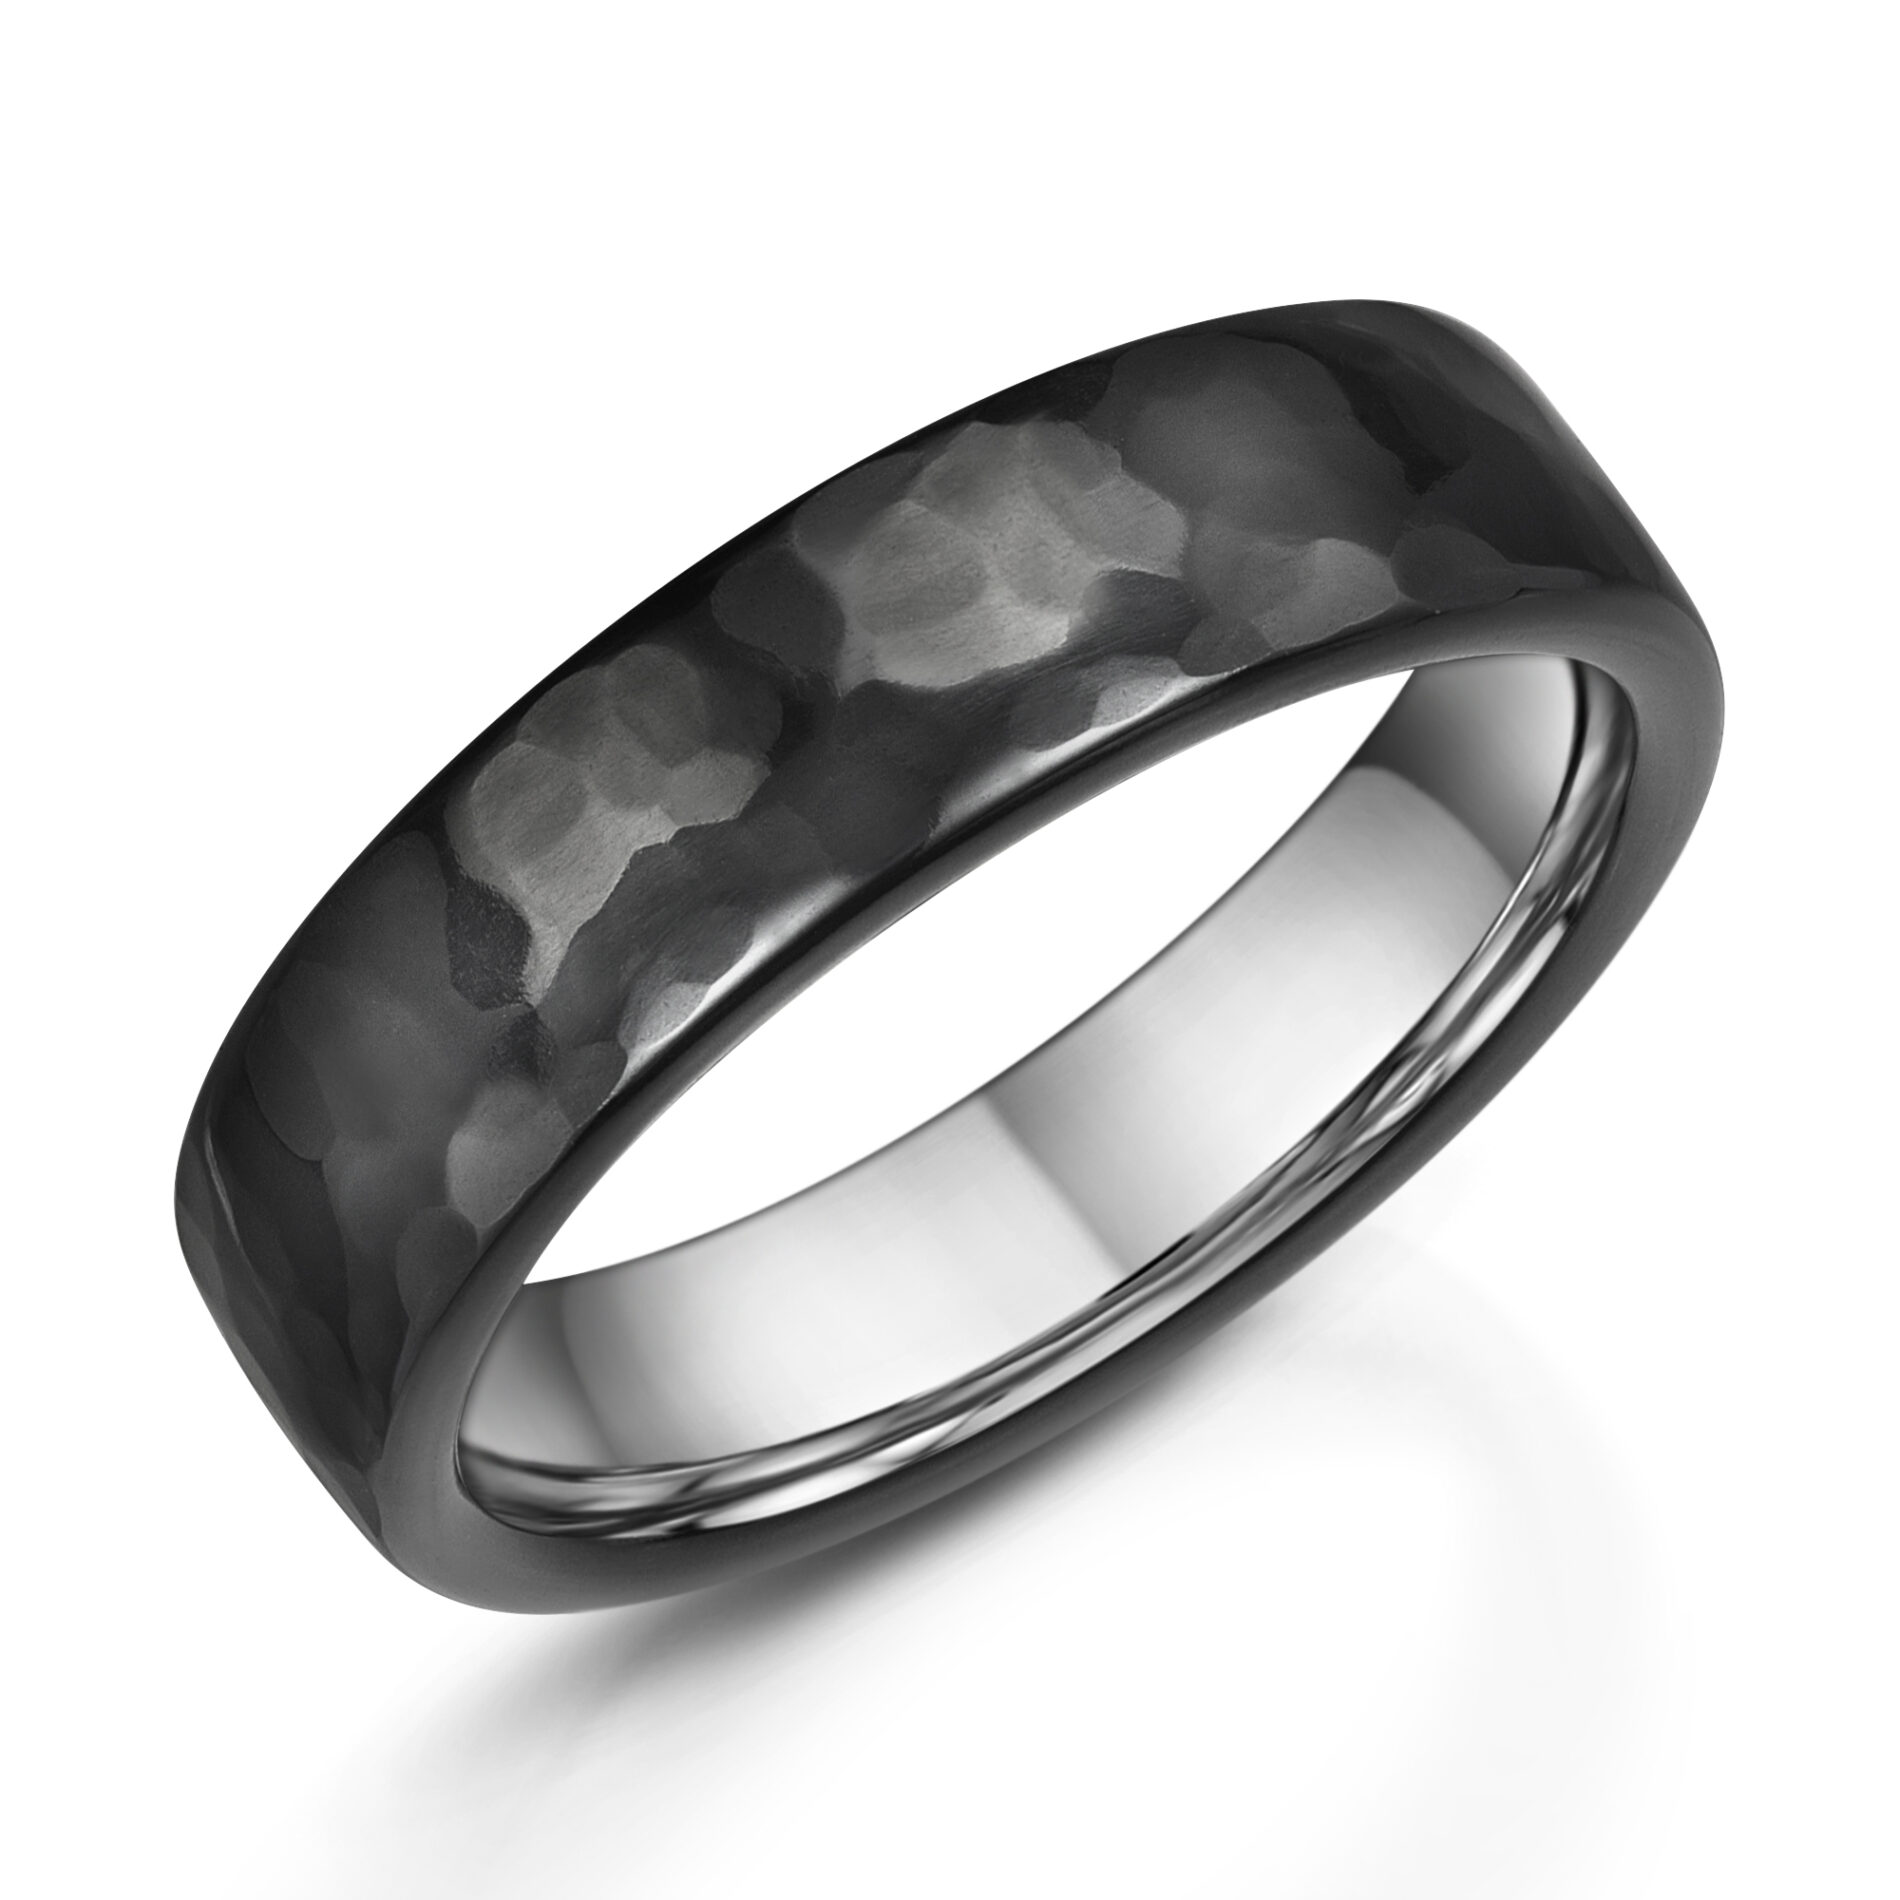 Hammered Zirconium Ring Silver Inlay